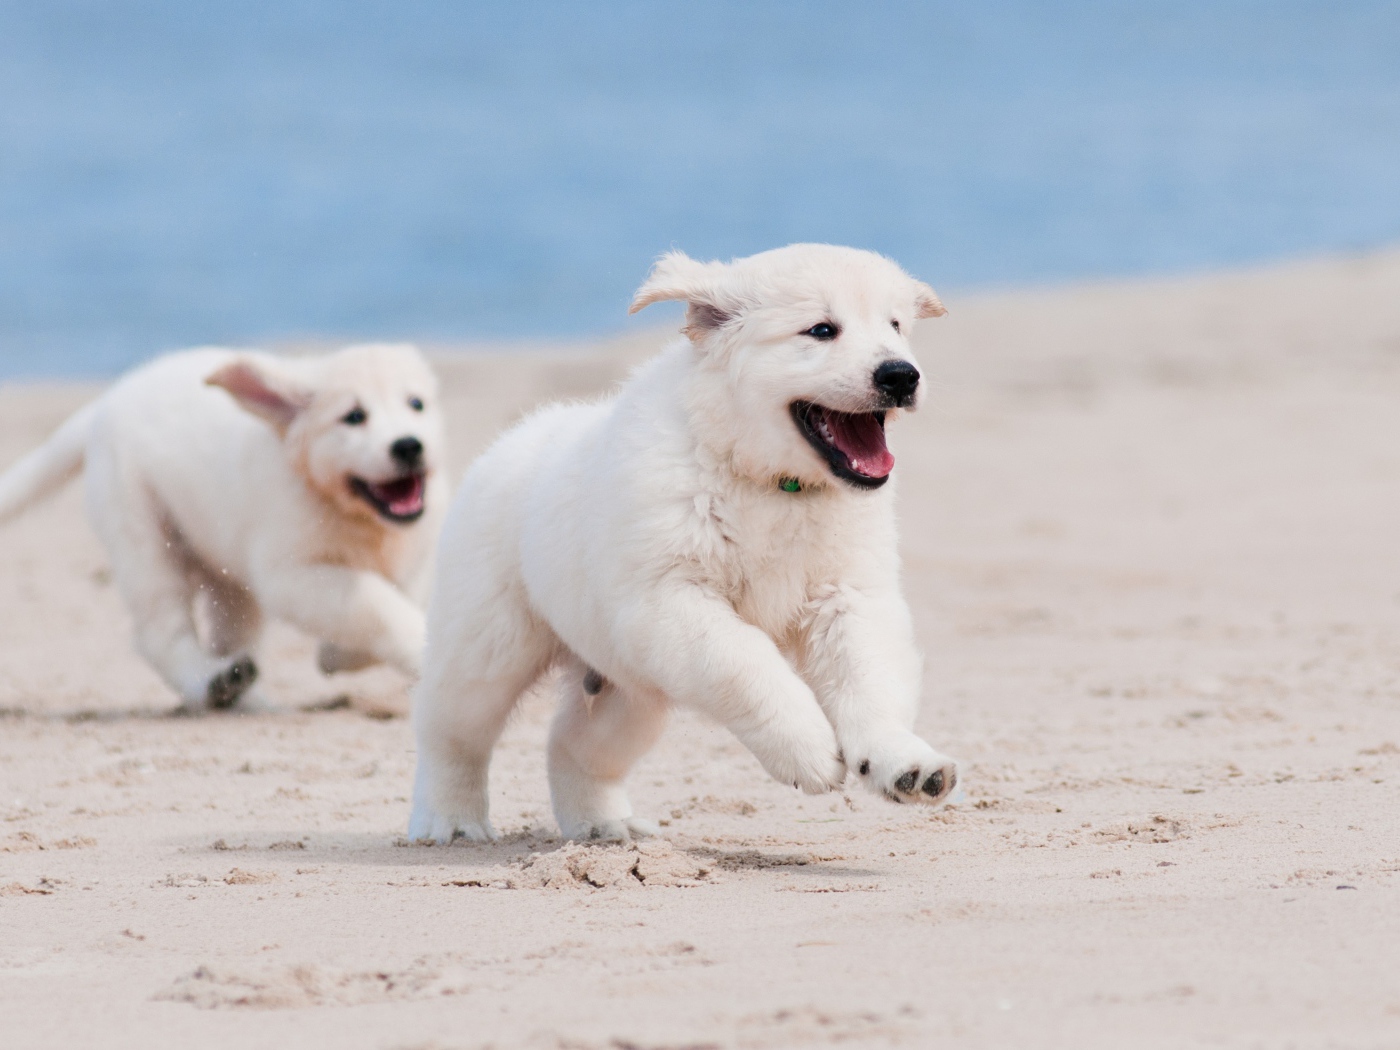 Two cheerful puppy of a golden retriever running along the beach